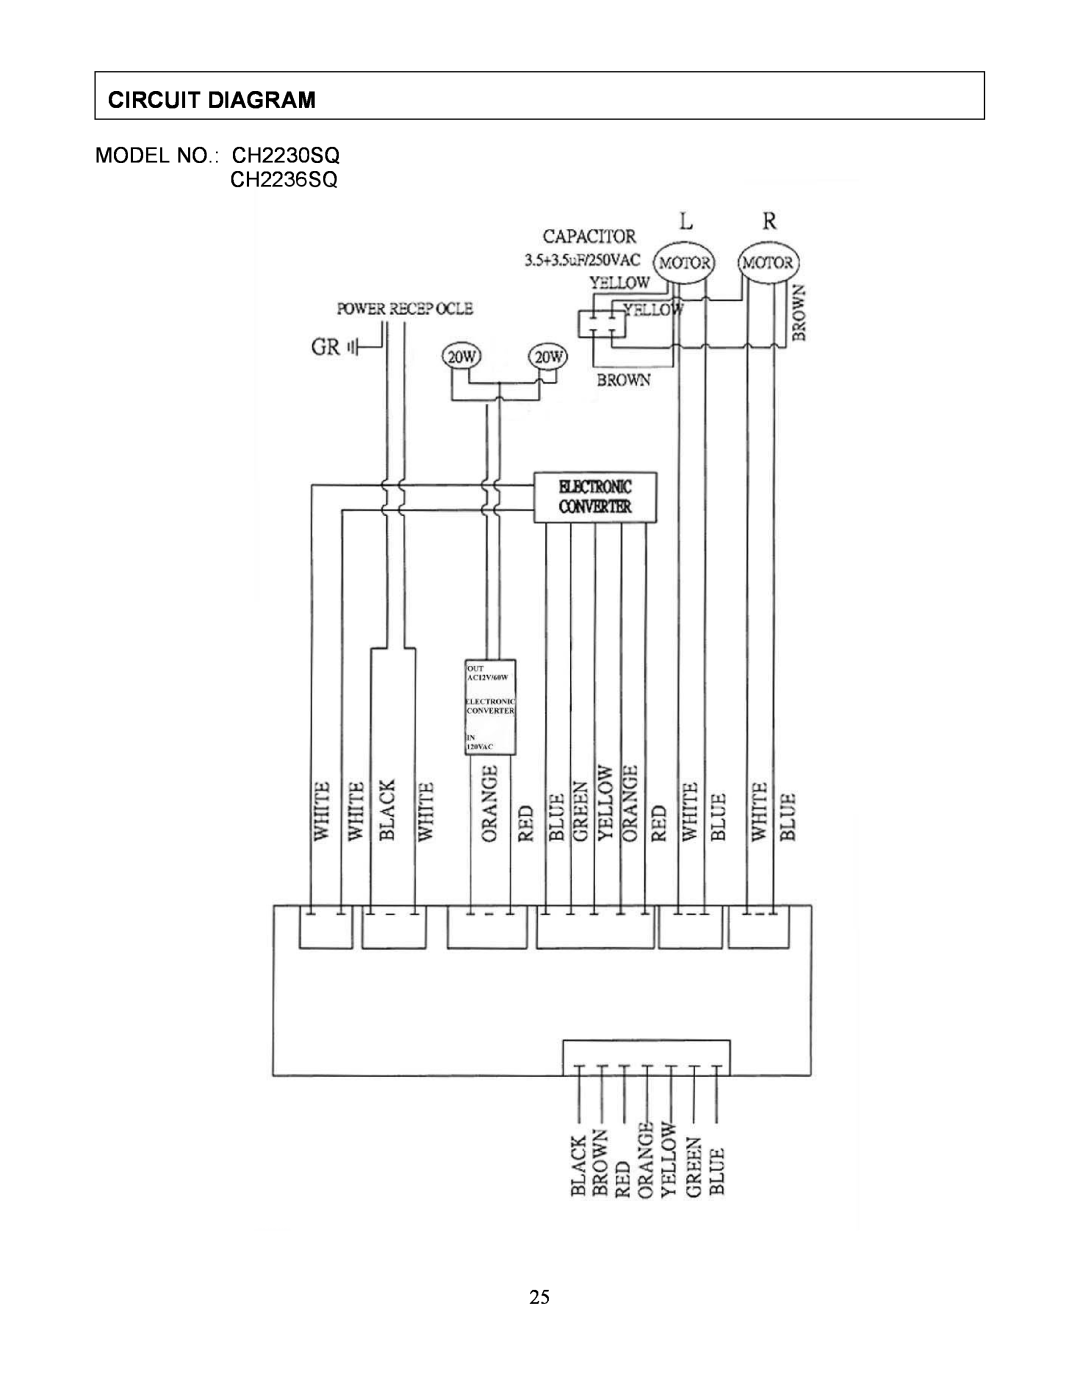 Kobe Range Hoods manual Circuit Diagram, MODEL NO. CH2230SQ CH2236SQ 